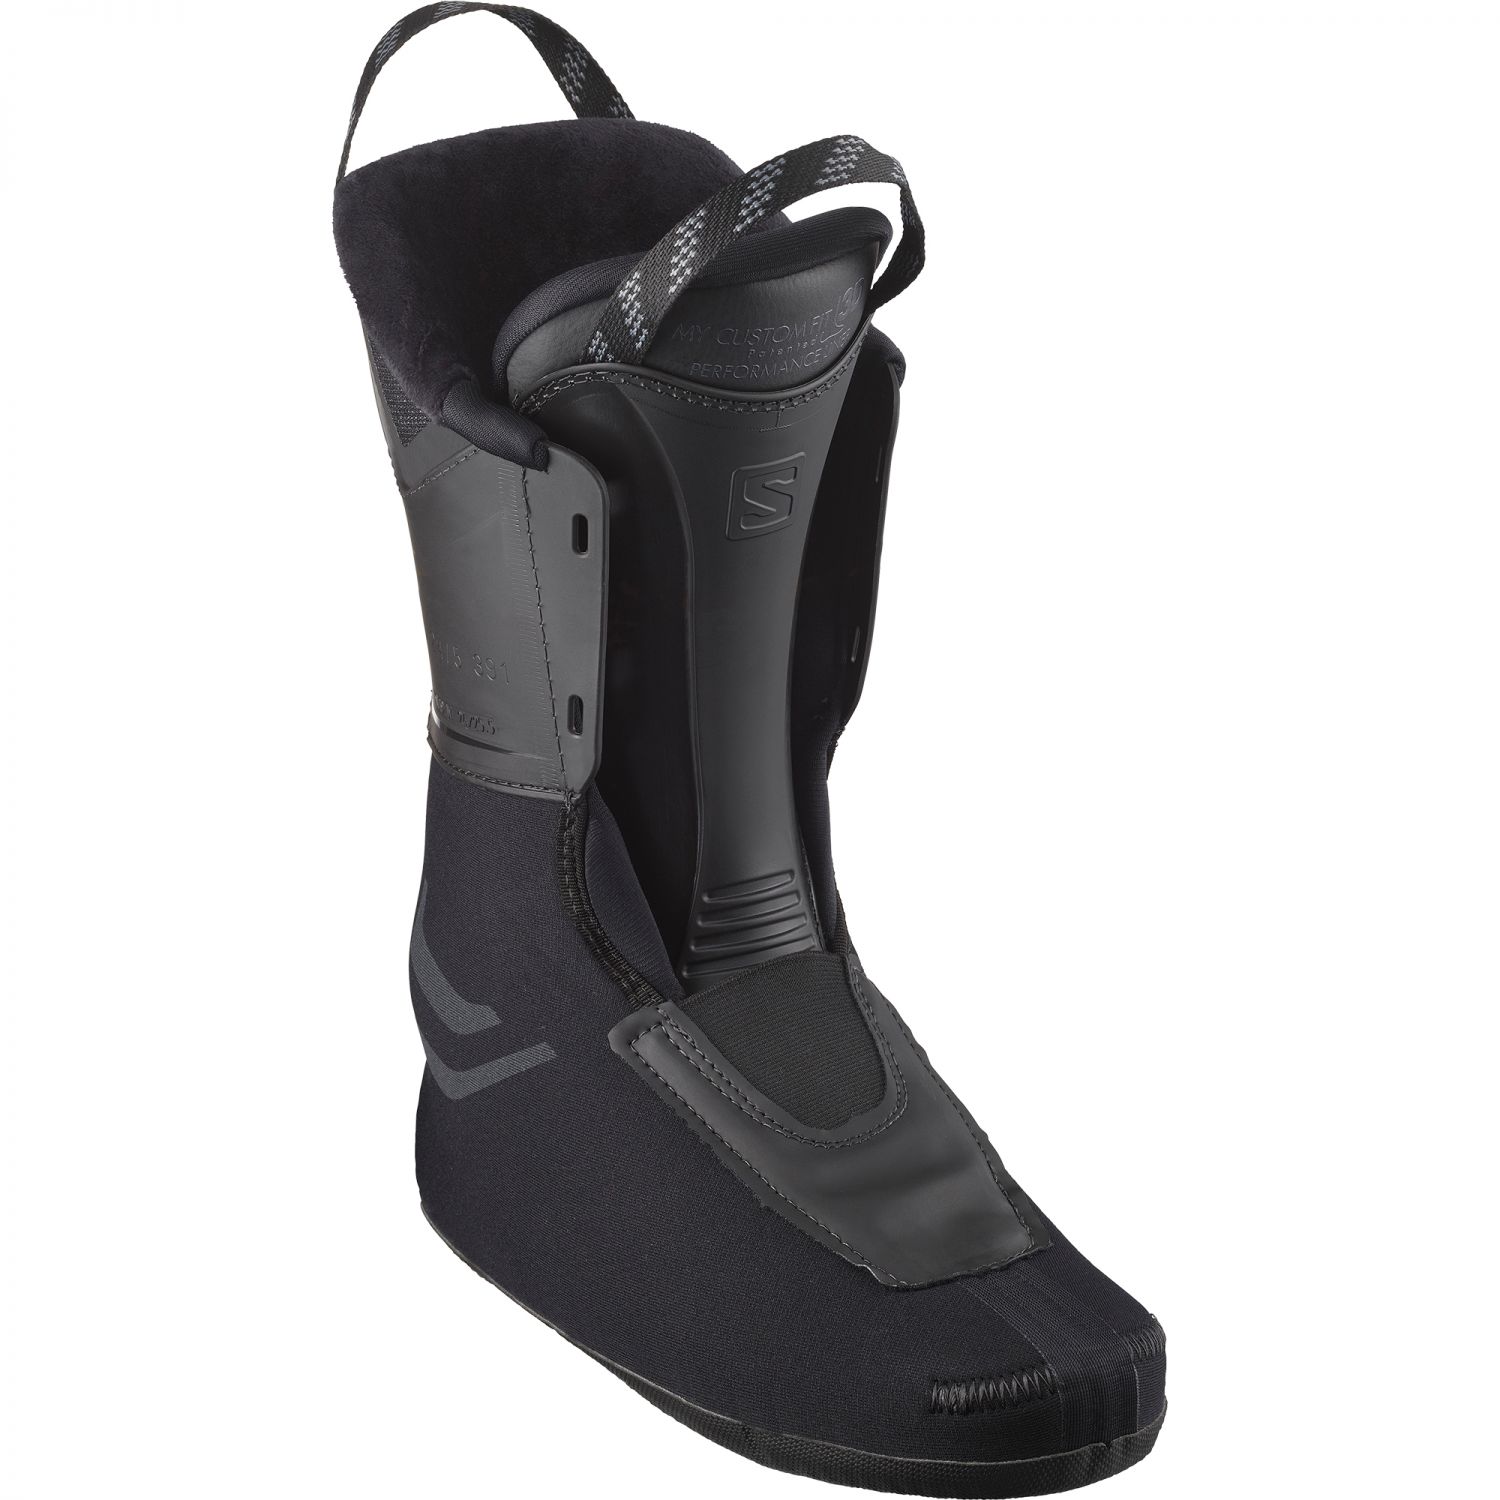 Salomon Shift PRO 90 W AT GW, ski boots, women, black/white moss/beluga